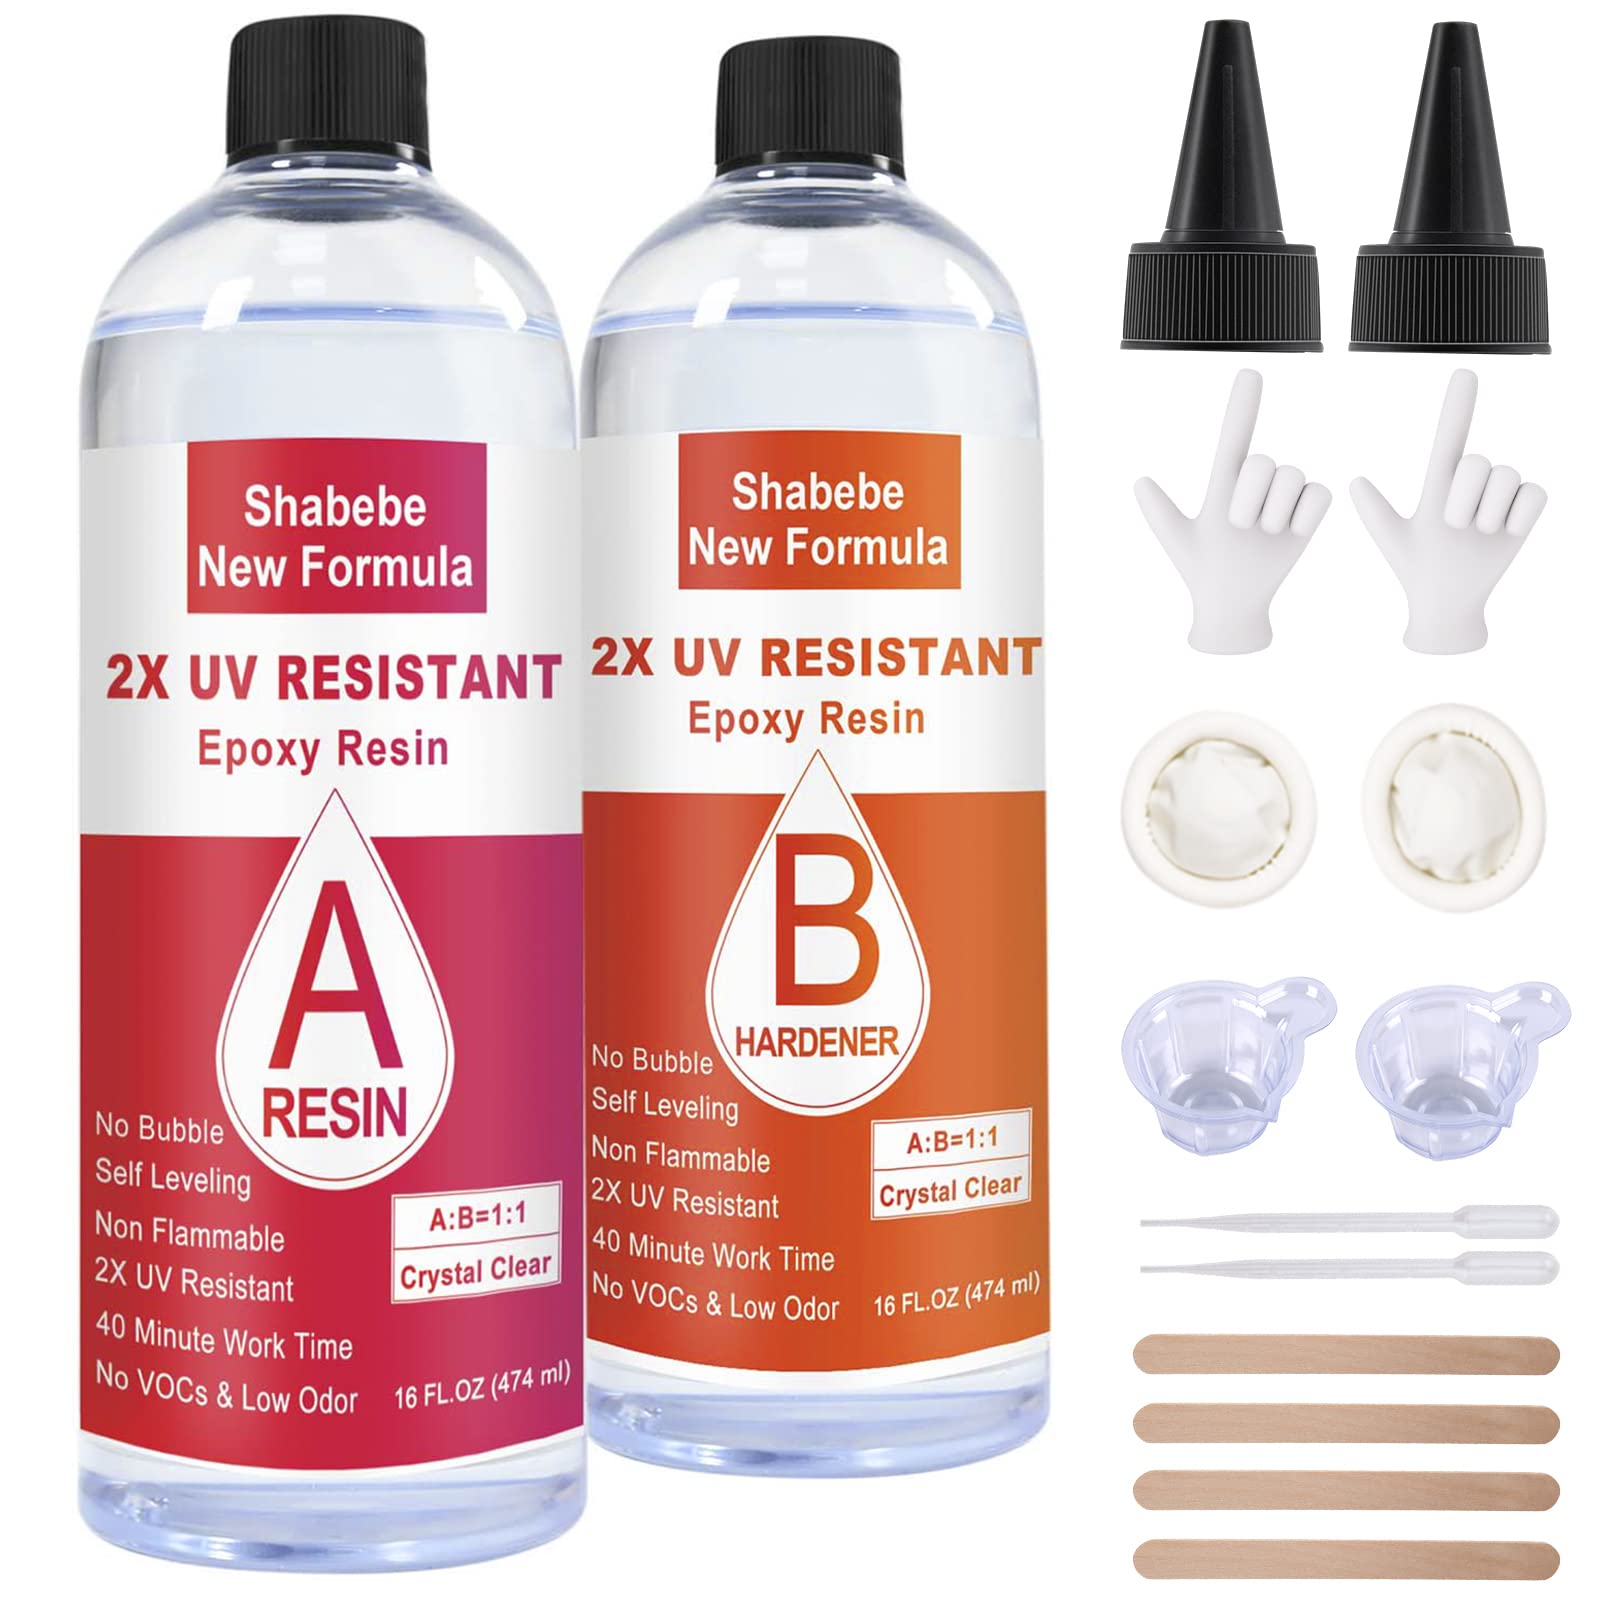 Art Resin & Crafting Epoxy Resin Kit